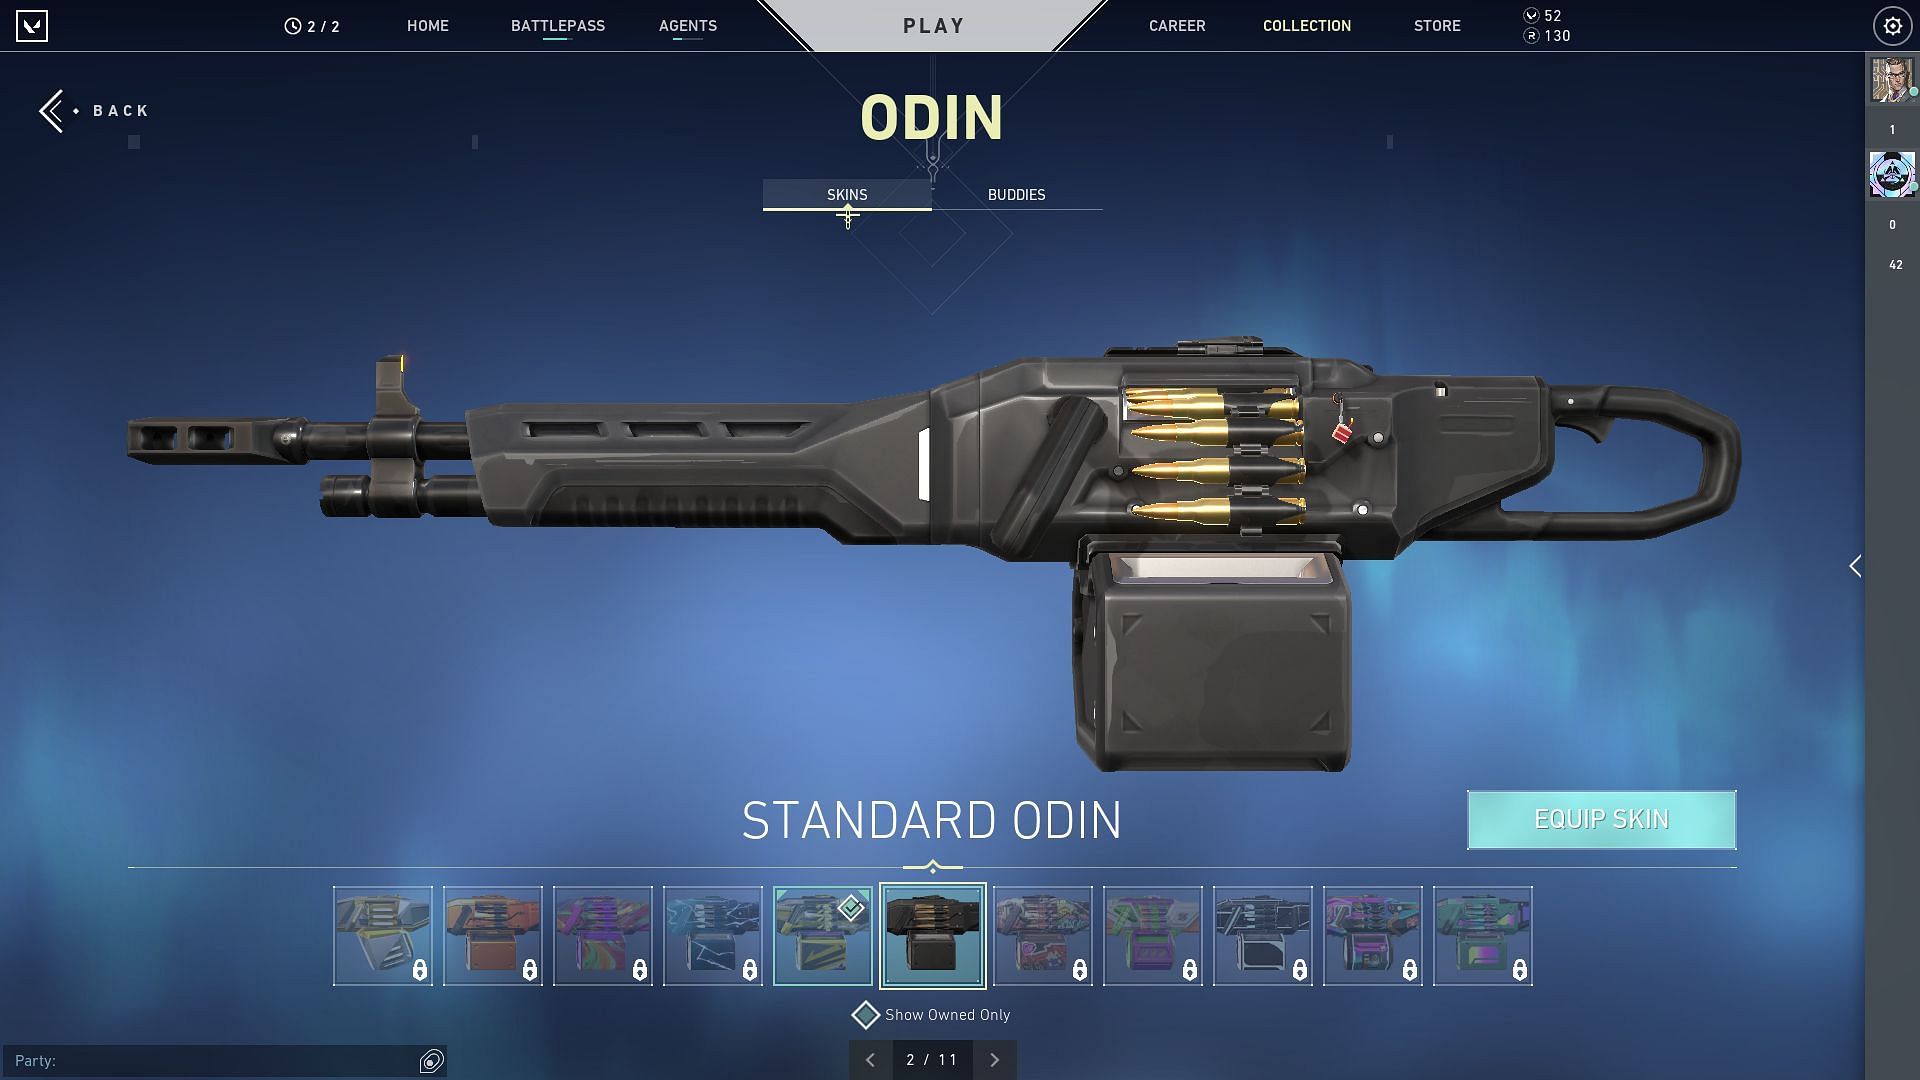 Odin costs 3200 credits on the in-game buy menu (Image via Sportskeeda)